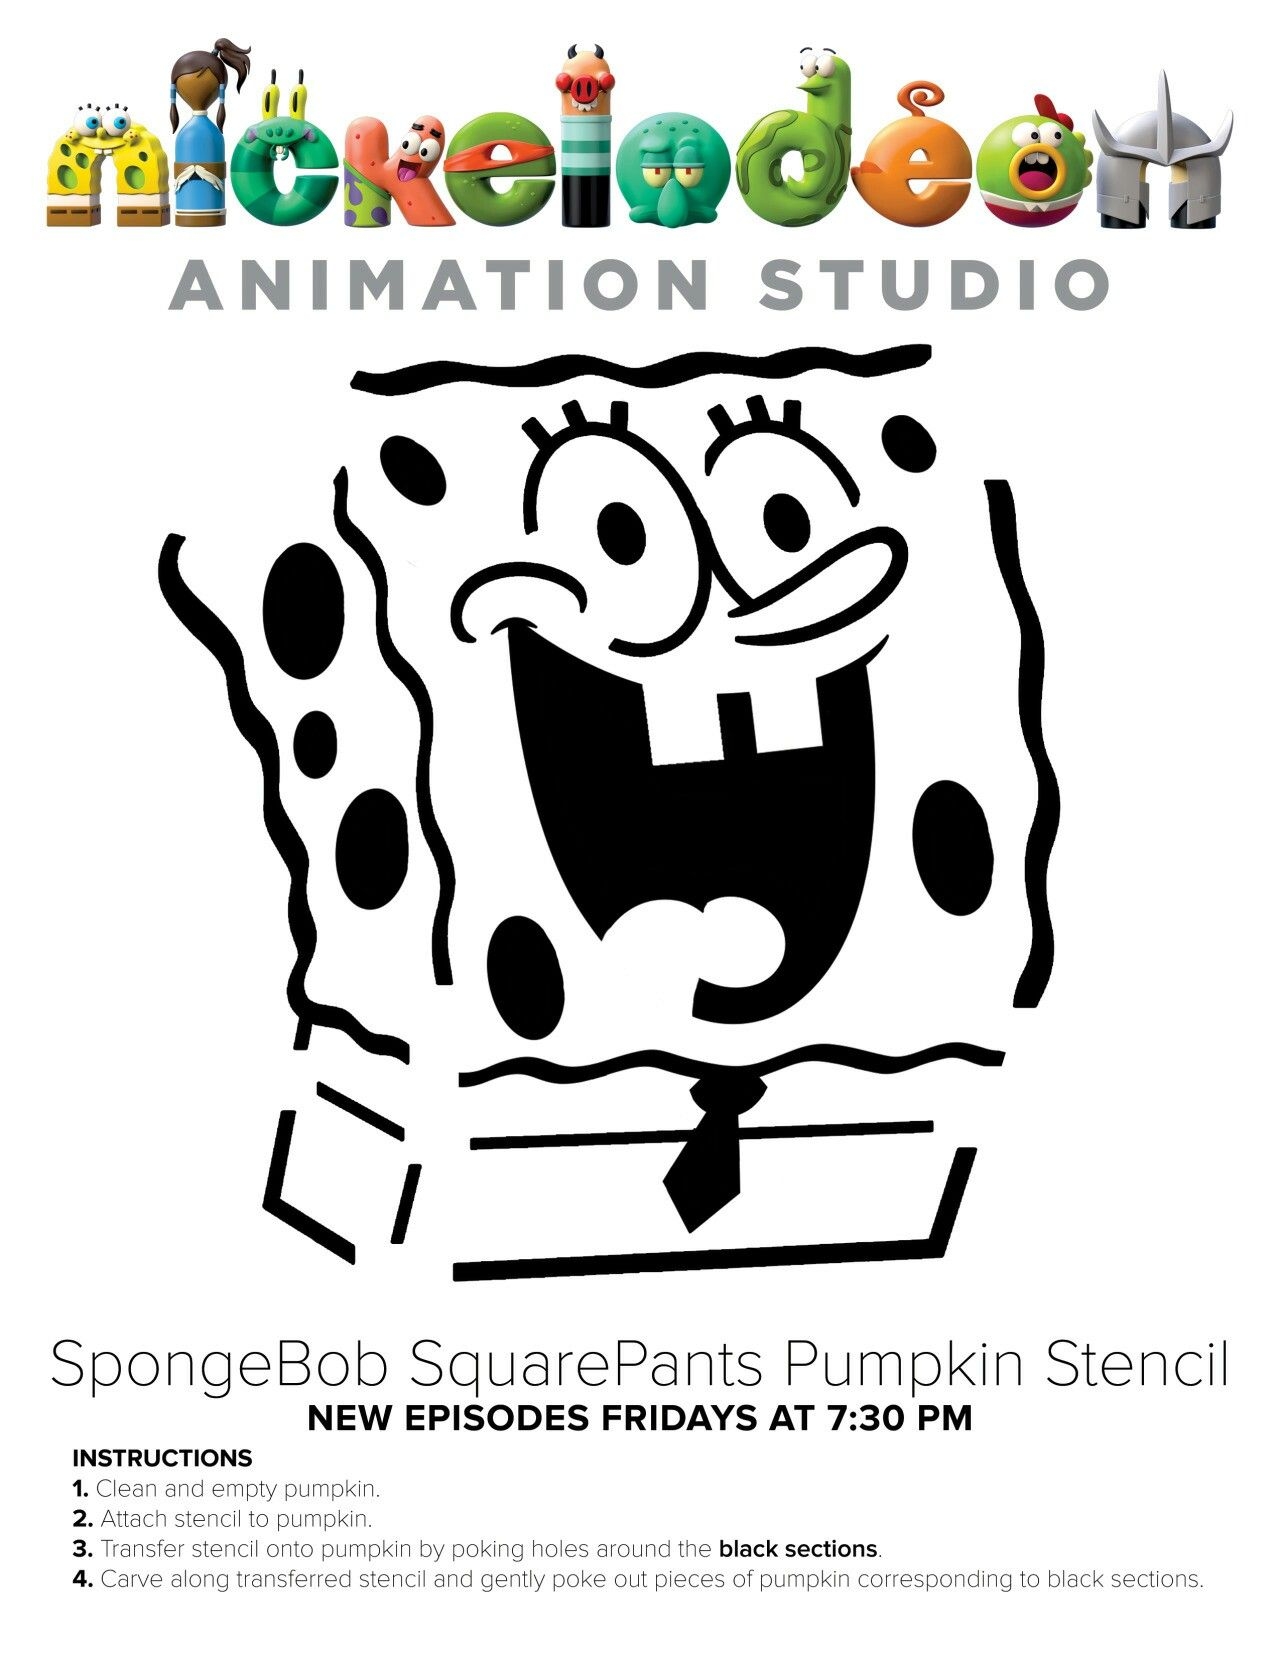 SpongeBob Pumpkin Stencil Spongebob Pumpkin Stencils Free